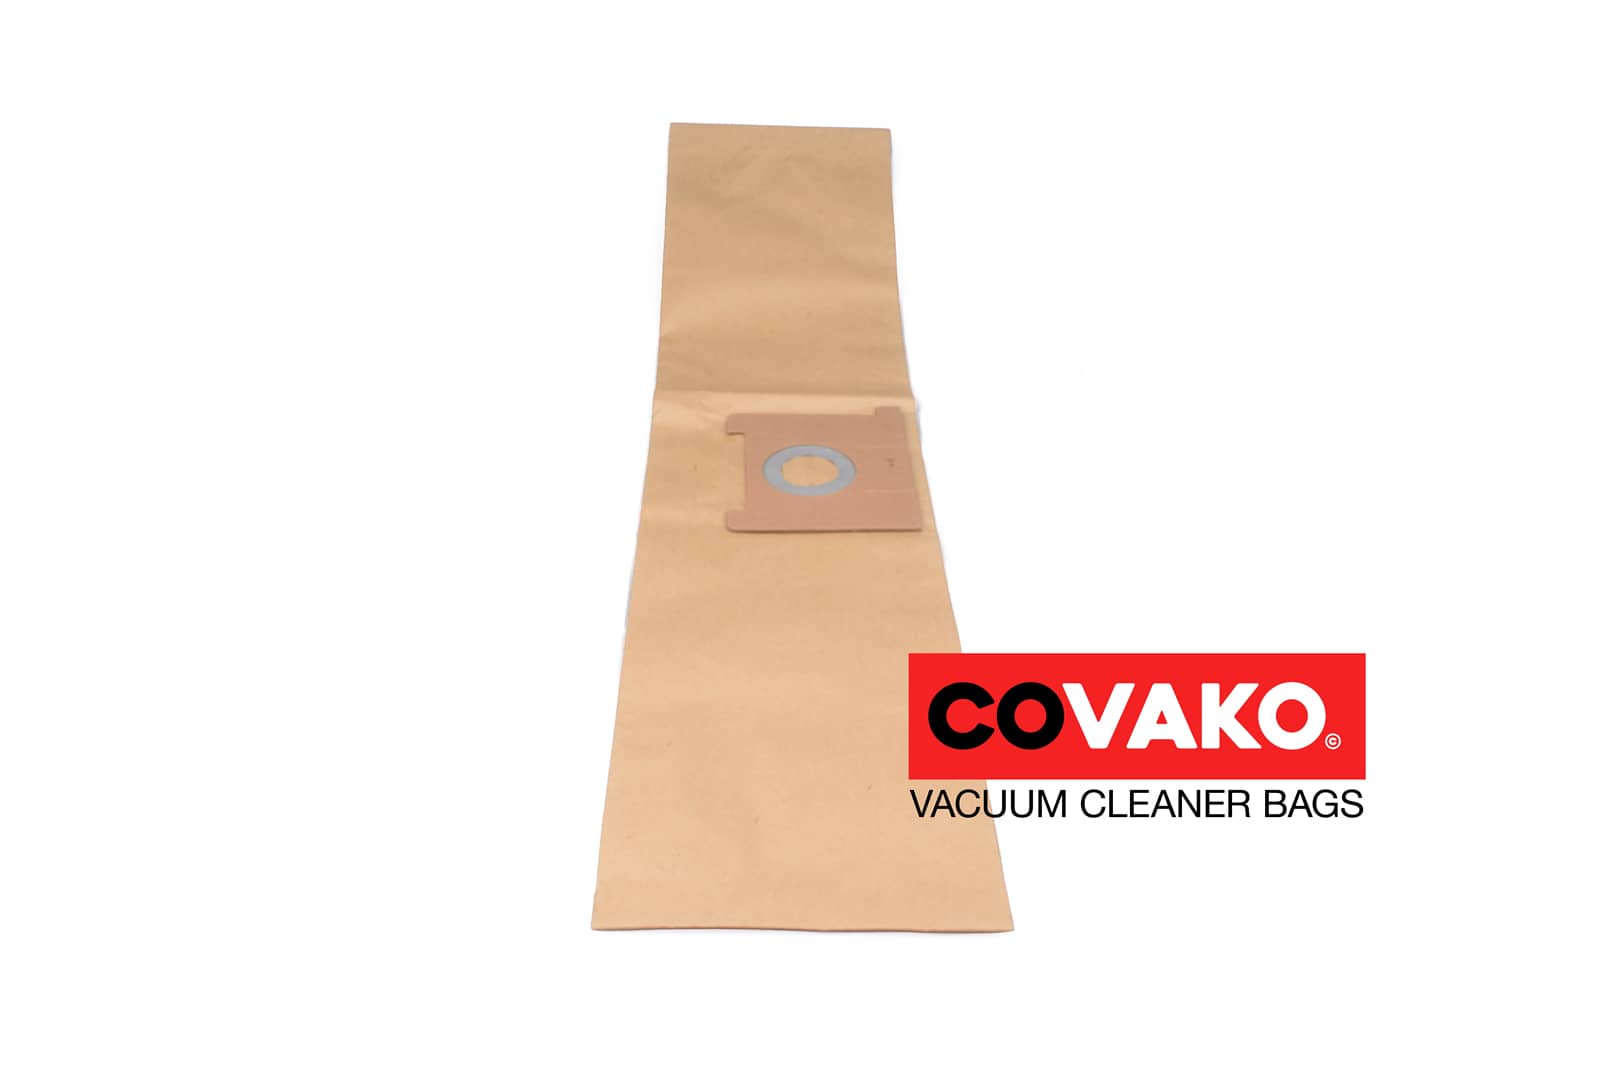 Comac flexi 9 / Paper - Comac vacuum cleaner bags